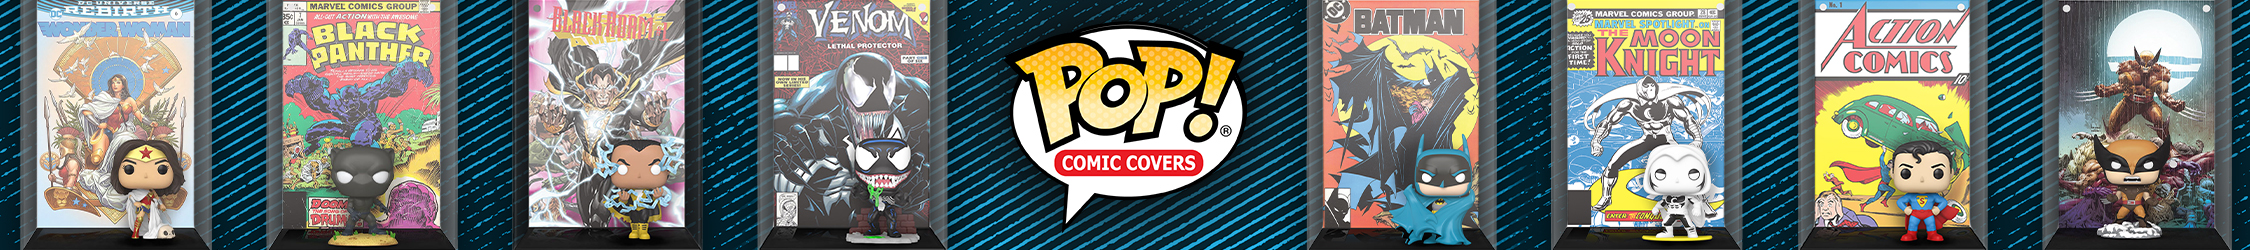 Funko Pop Comic Covers